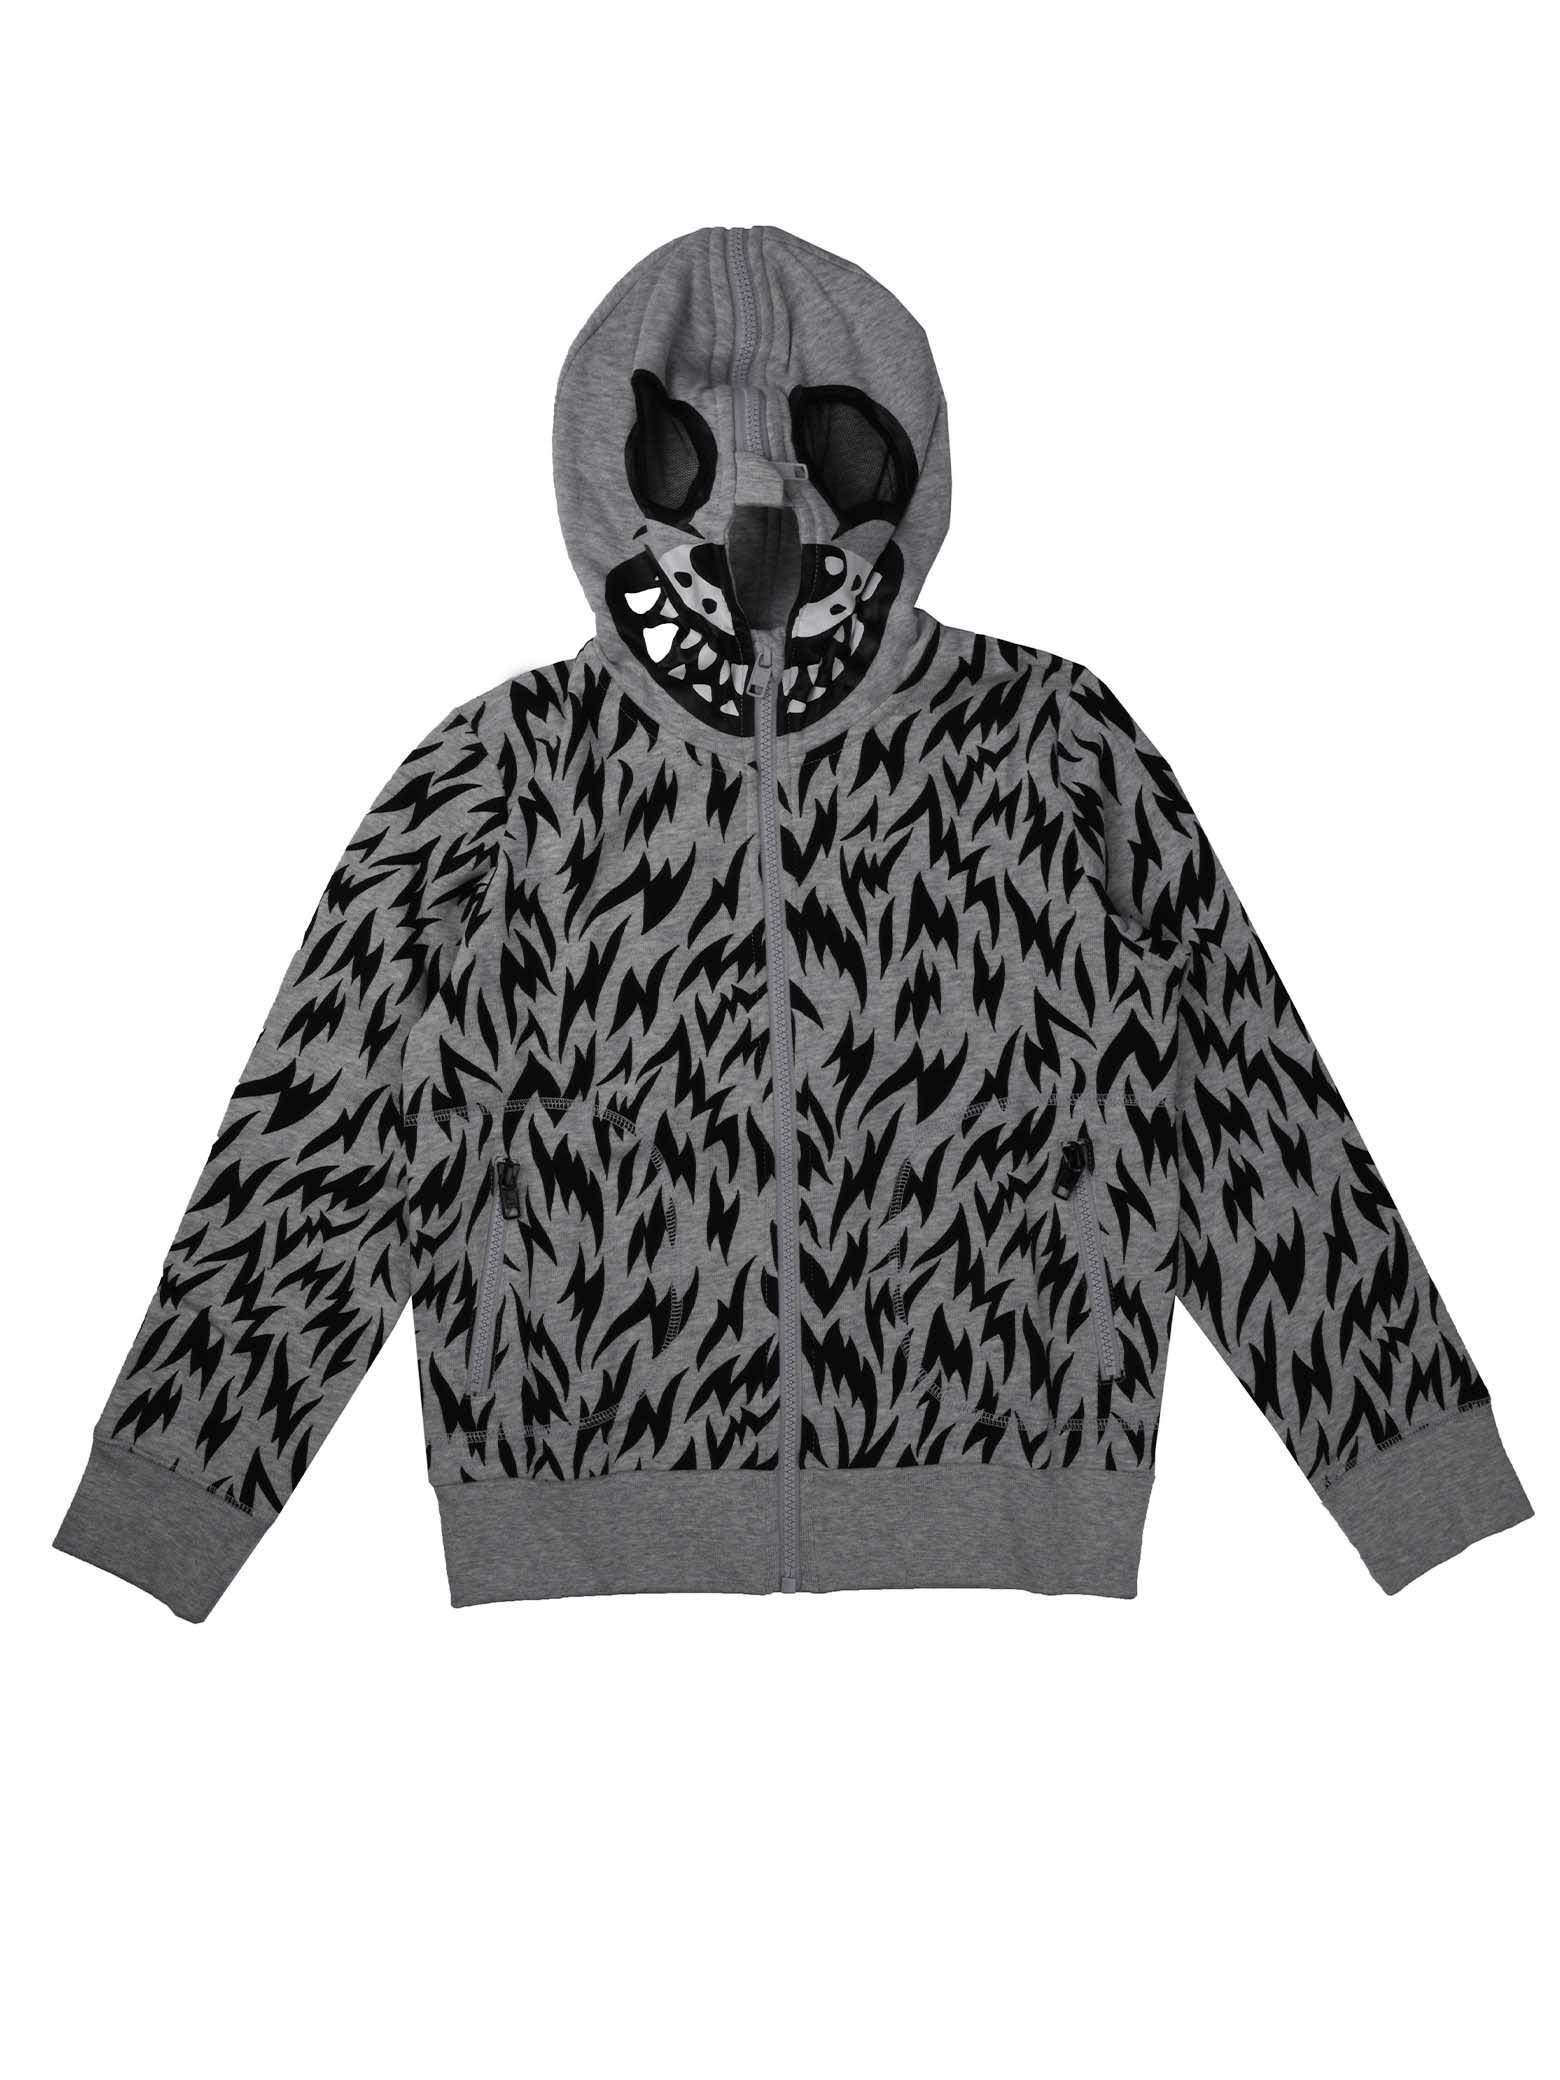 Stella McCartney Kids Sweatshirt With Zip And Hood Gray And Black